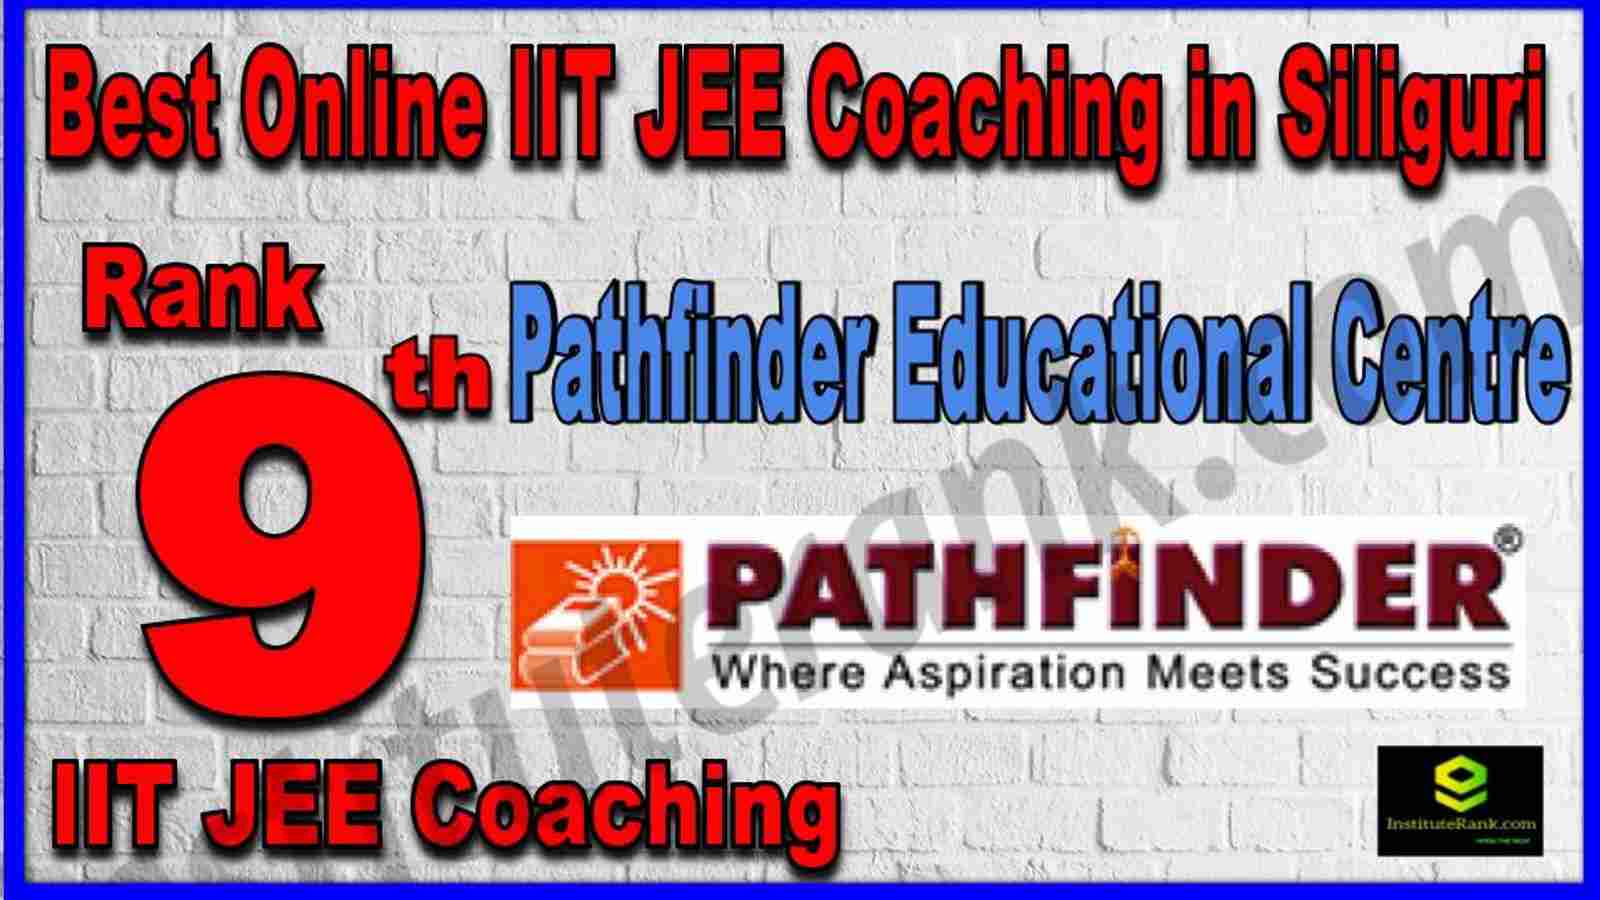 Rank 9th Best Online IIT-JEE Coaching in Siliguri